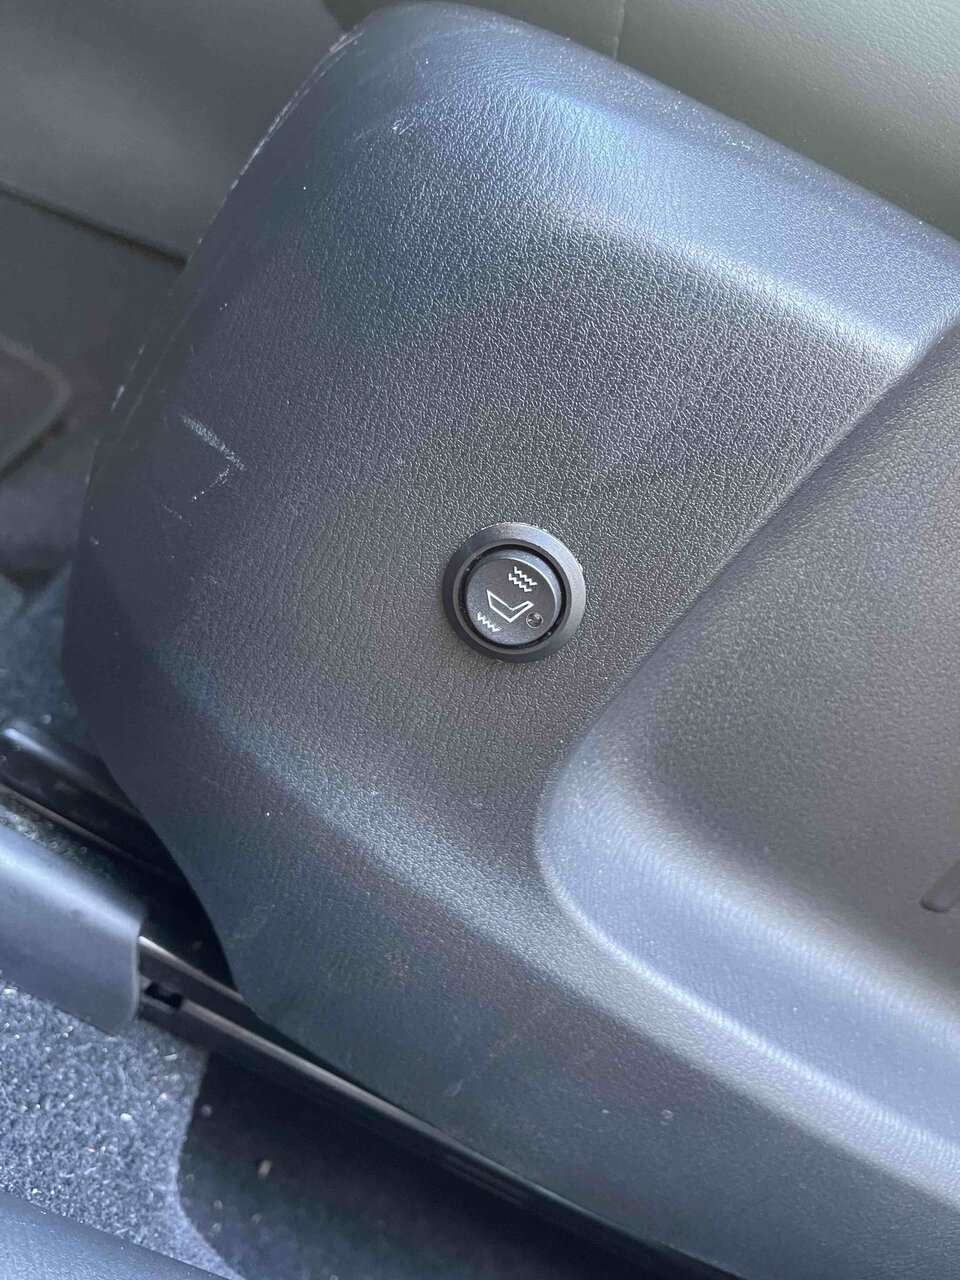 Heated Seat Button.jpg